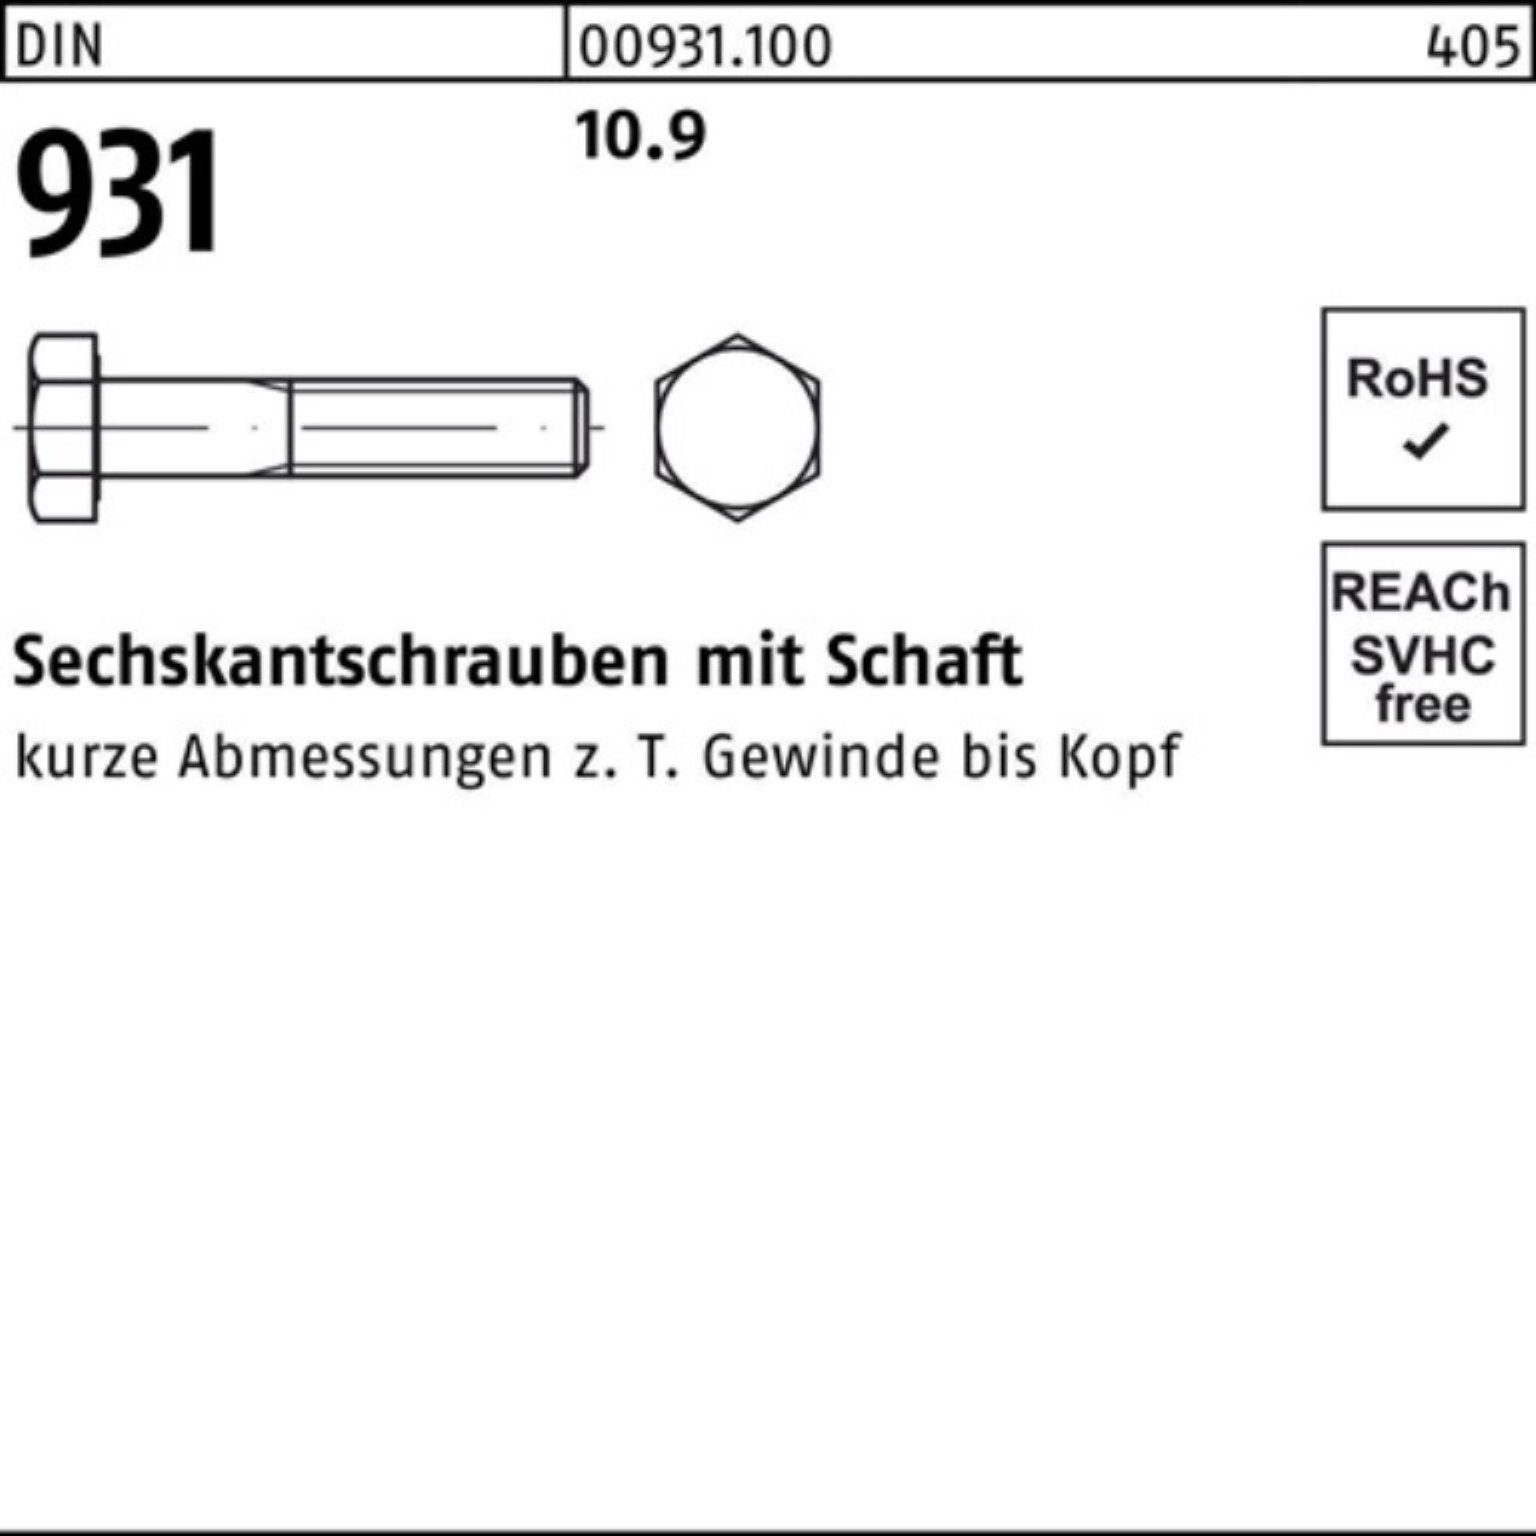 M20x Reyher 1 100er 931 Stück DIN Sechskantschraube Schaft Sechskantschraube Pack DIN 280 10.9